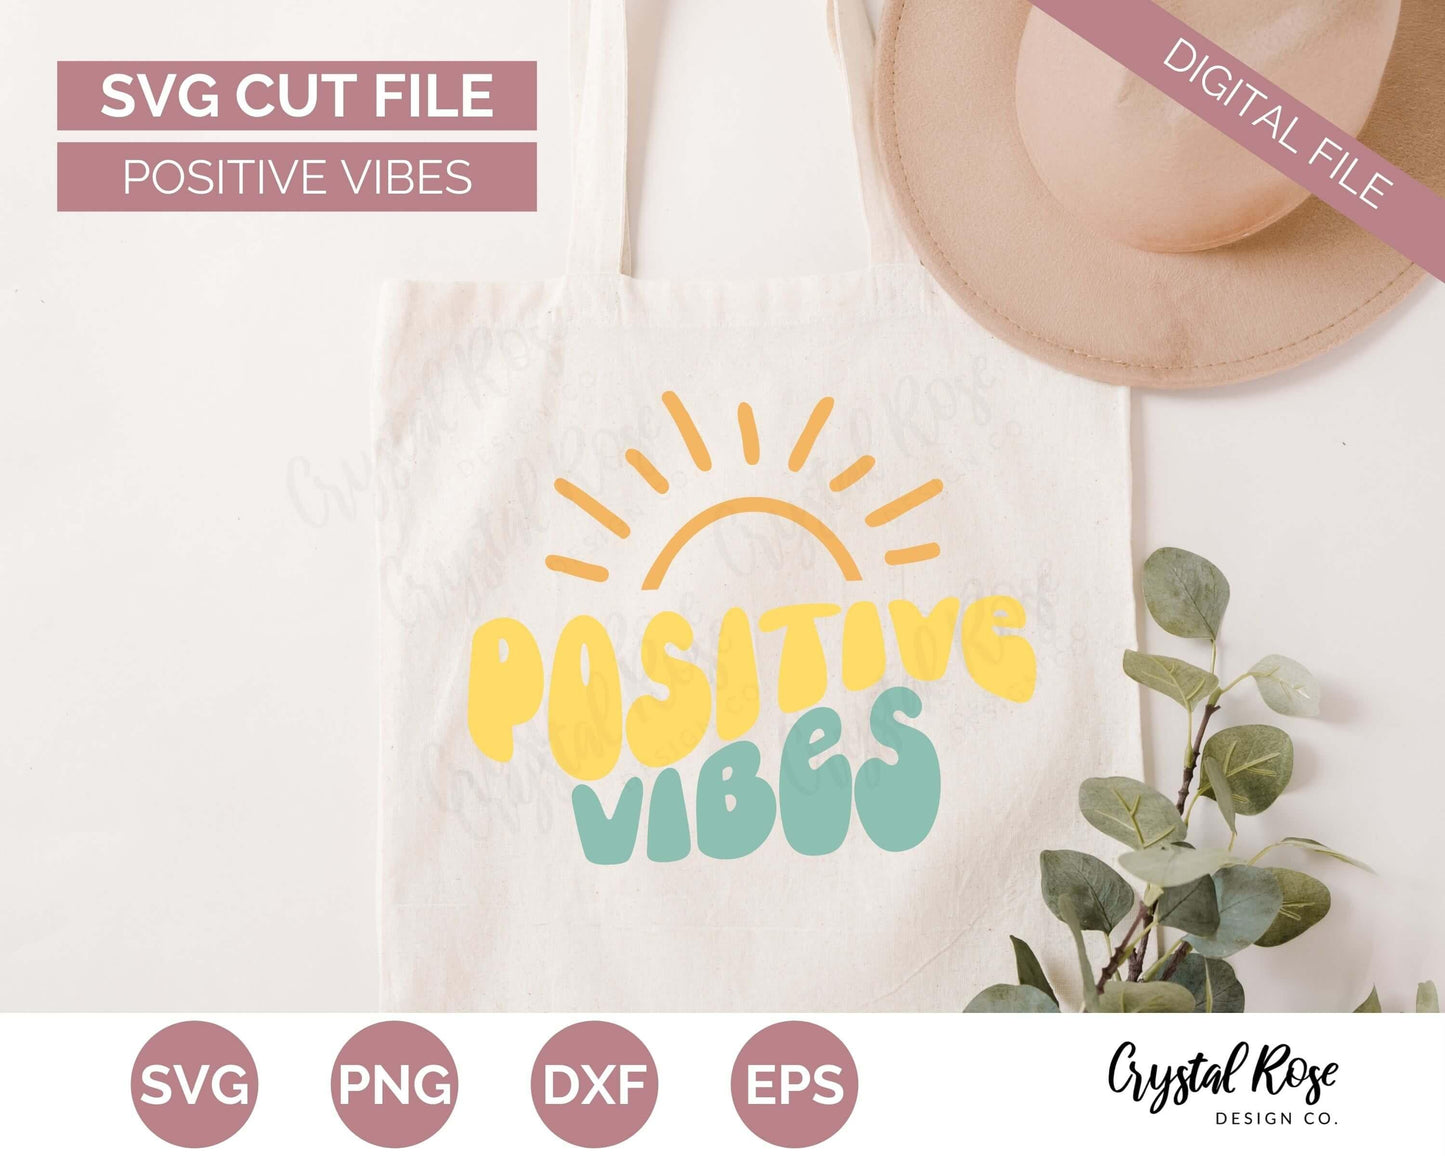 Retro Positive Vibes SVG, Inspirational SVG, Digital Download, Cricut, Silhouette, Glowforge (includes svg/png/dxf/eps) - Crystal Rose Design Co.